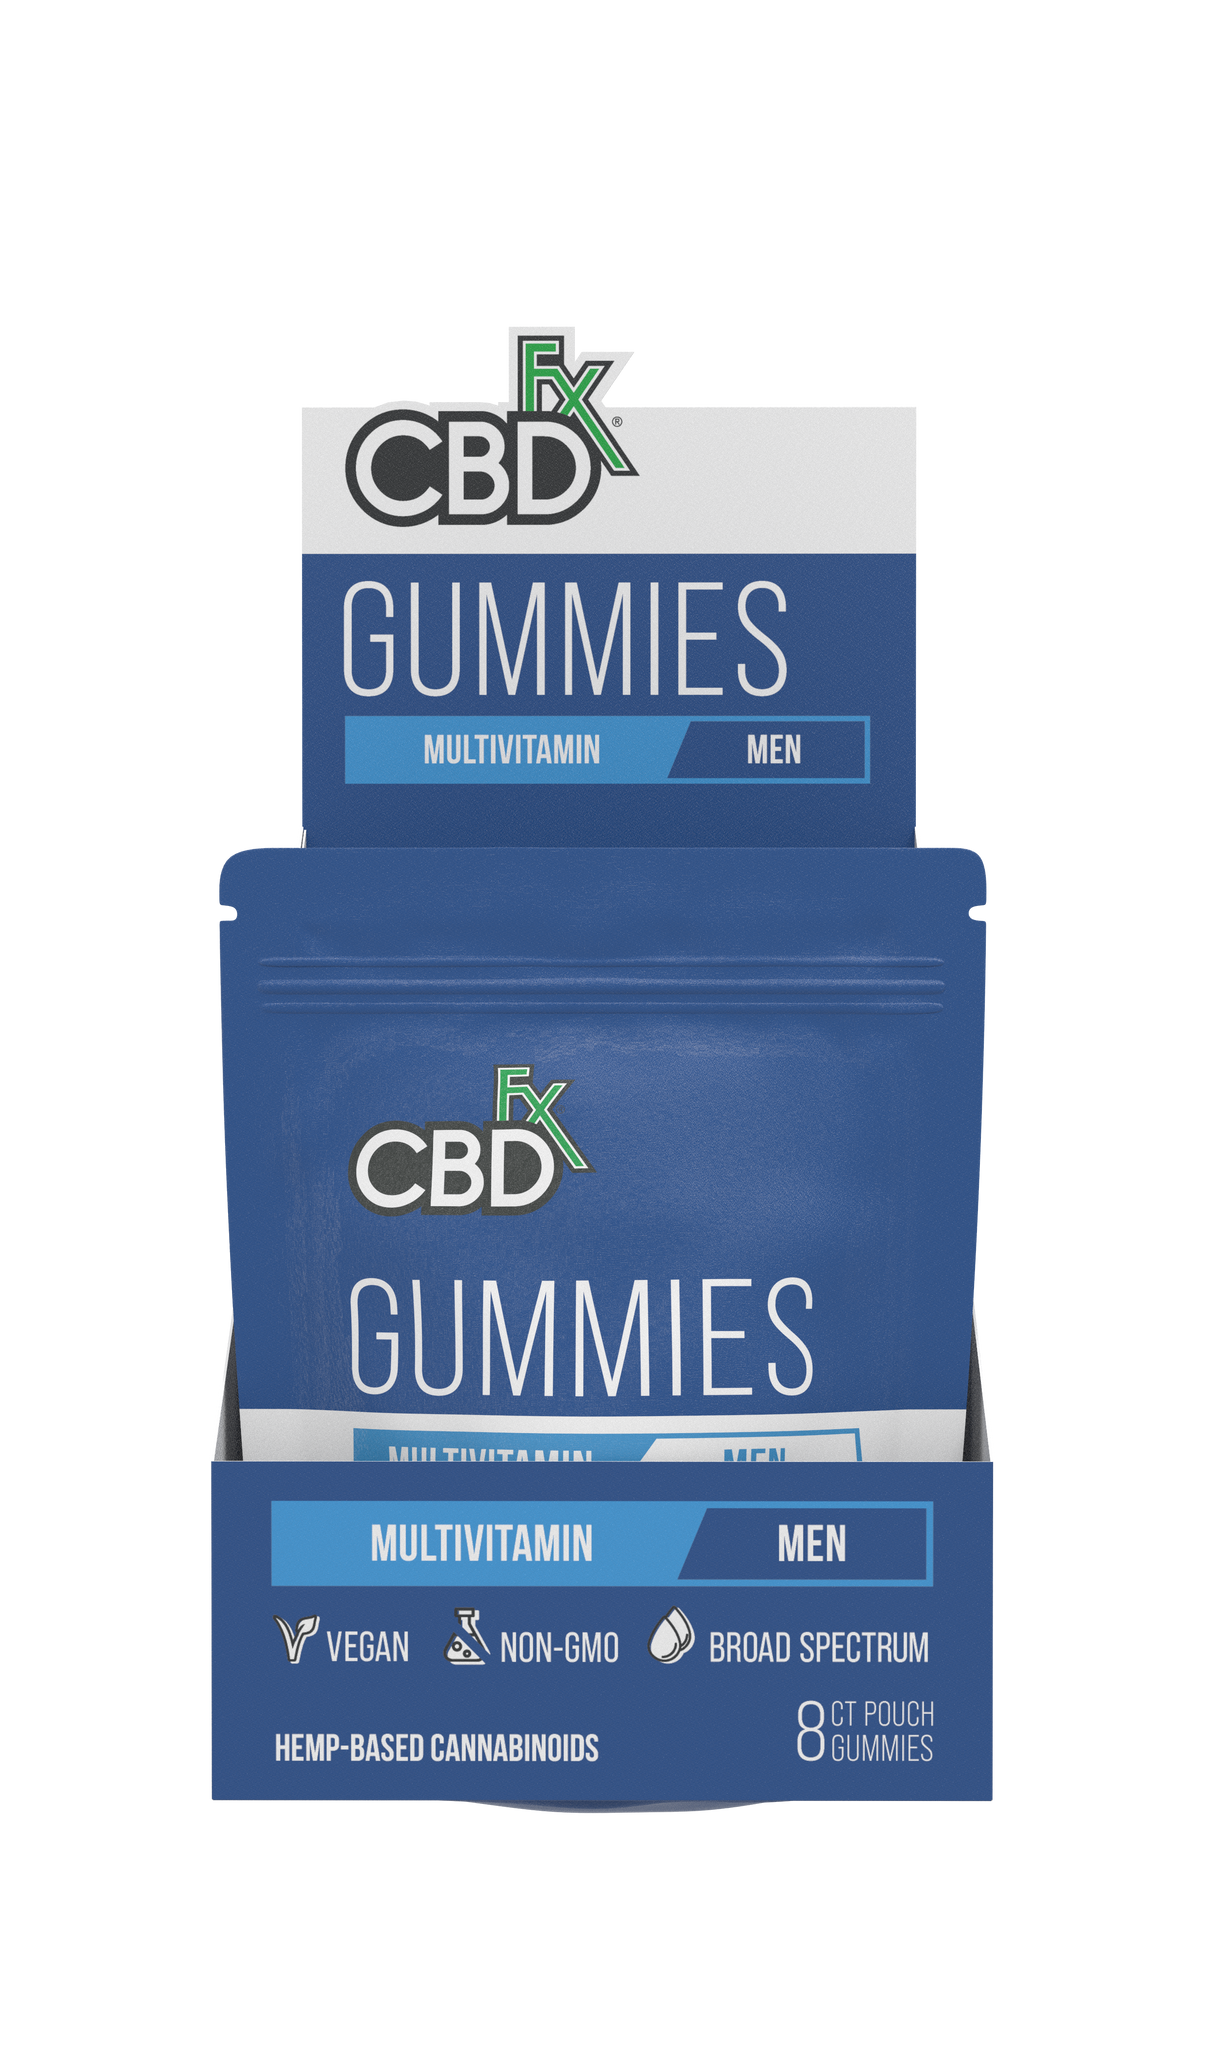 CBDfx Multivitamin CBD Gummies - Men